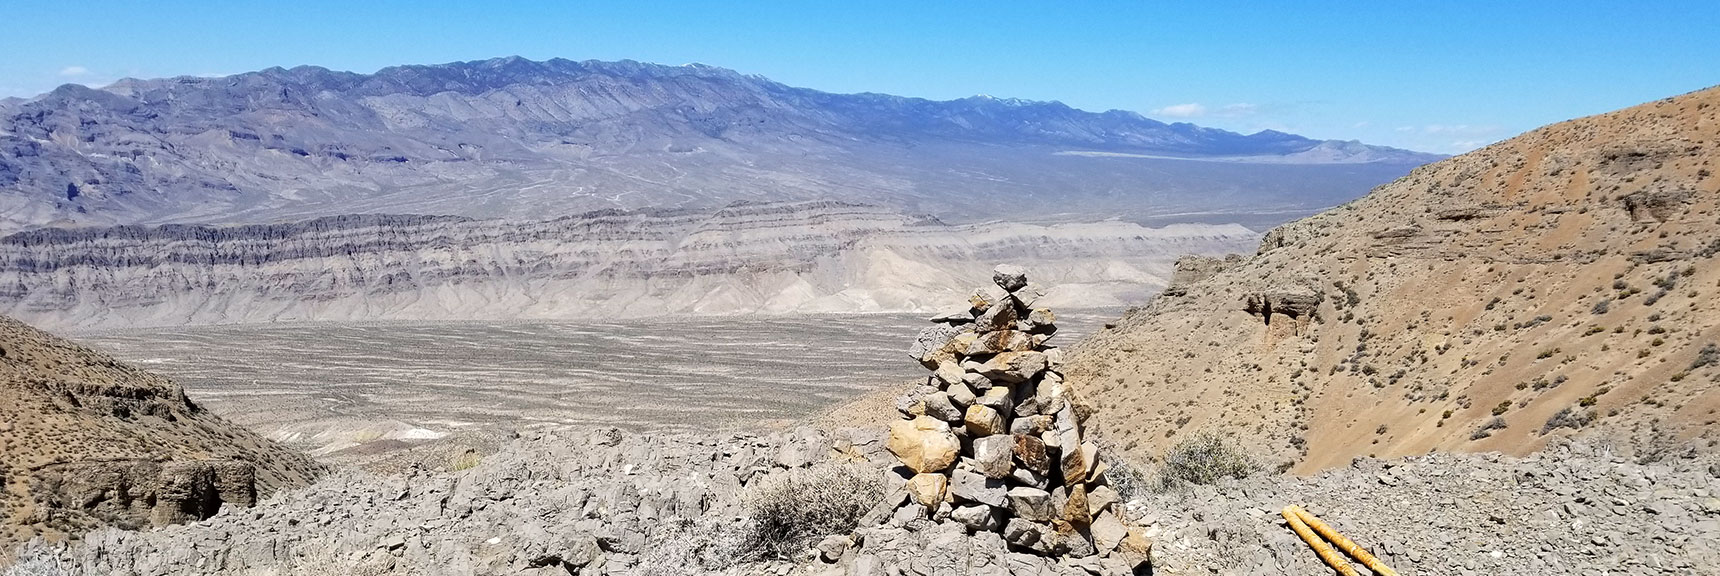 Gass Peak Nevada mid-summit descent point, view of Sheep Mountain Range.